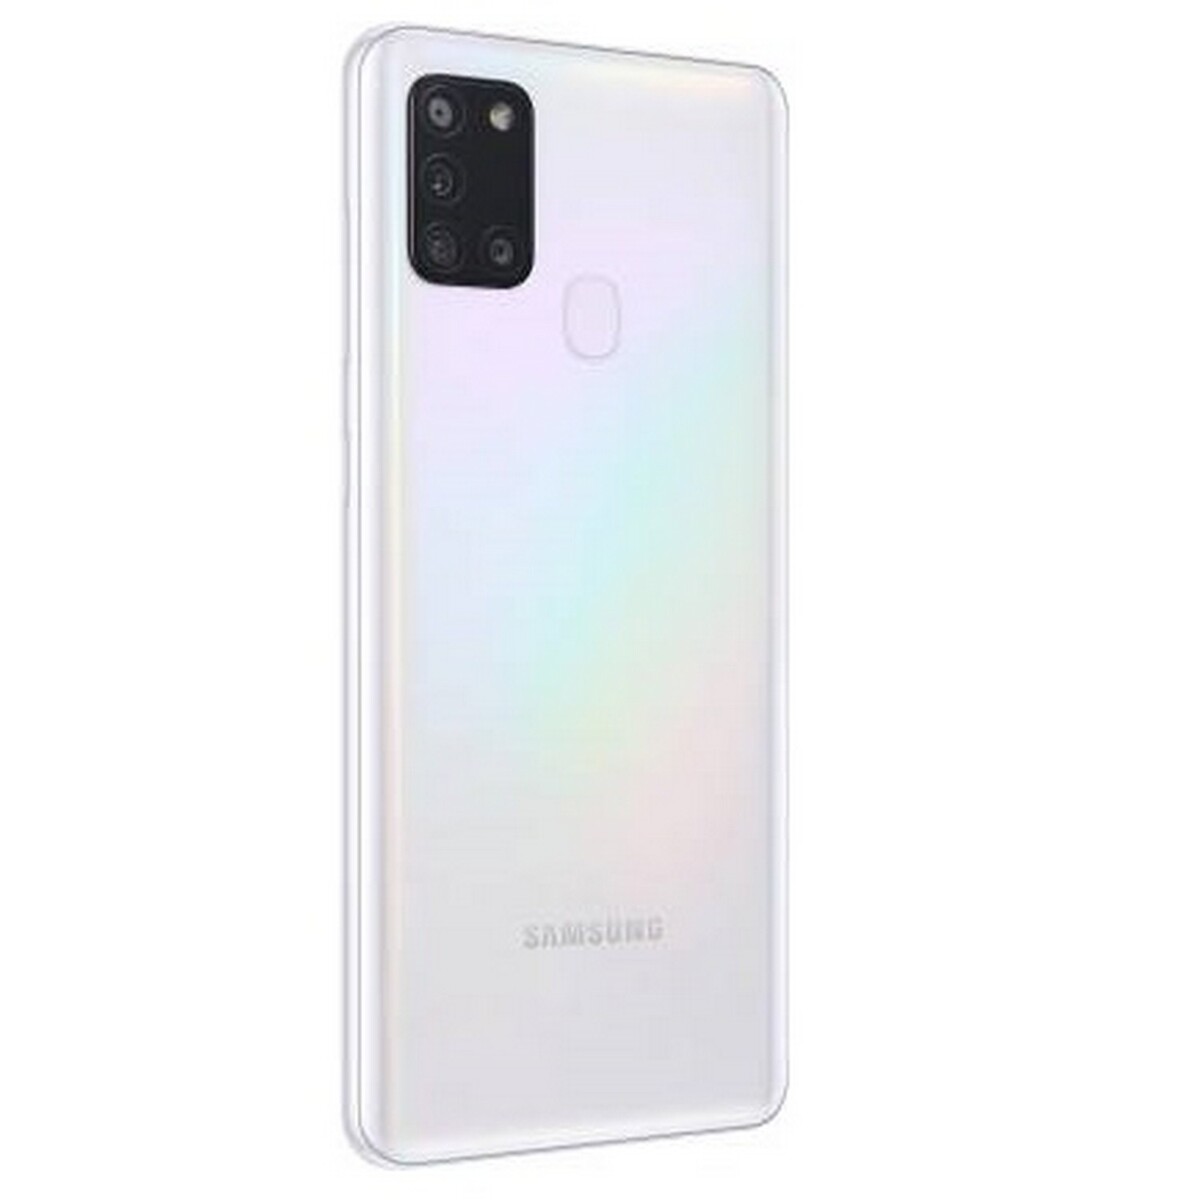 Samsung A21s 6GB /64GB  White